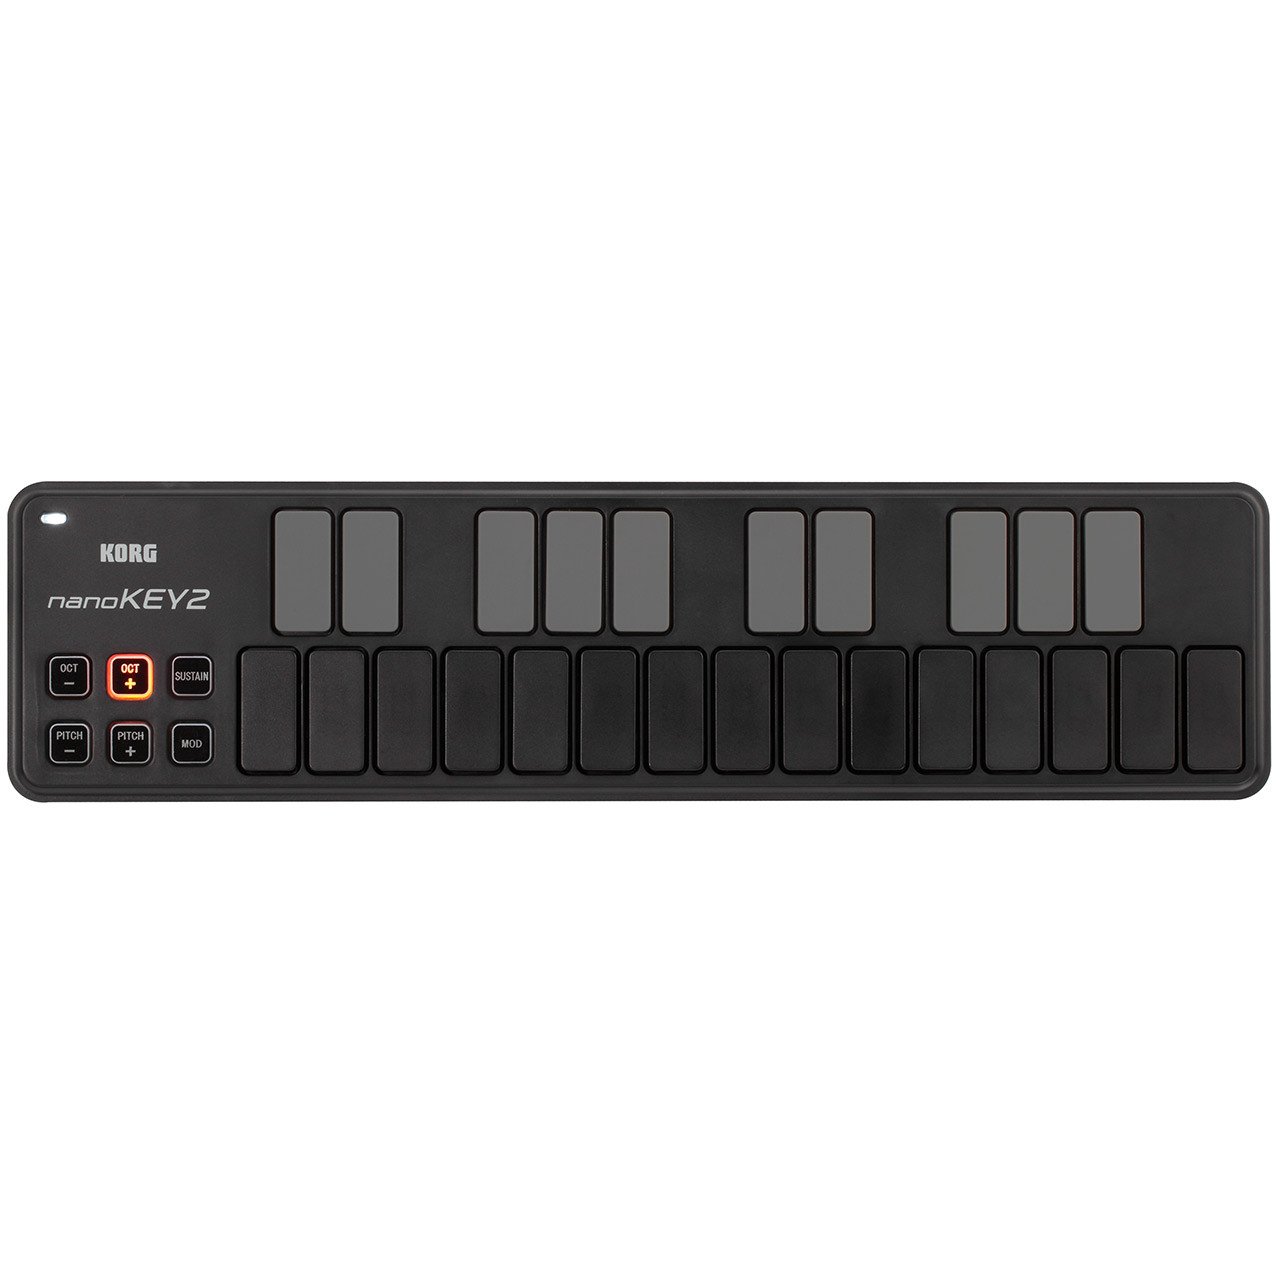 Controller Keyboards - Korg NanoKEY2 25-Key Portable USB Controller Keyboard BLACK